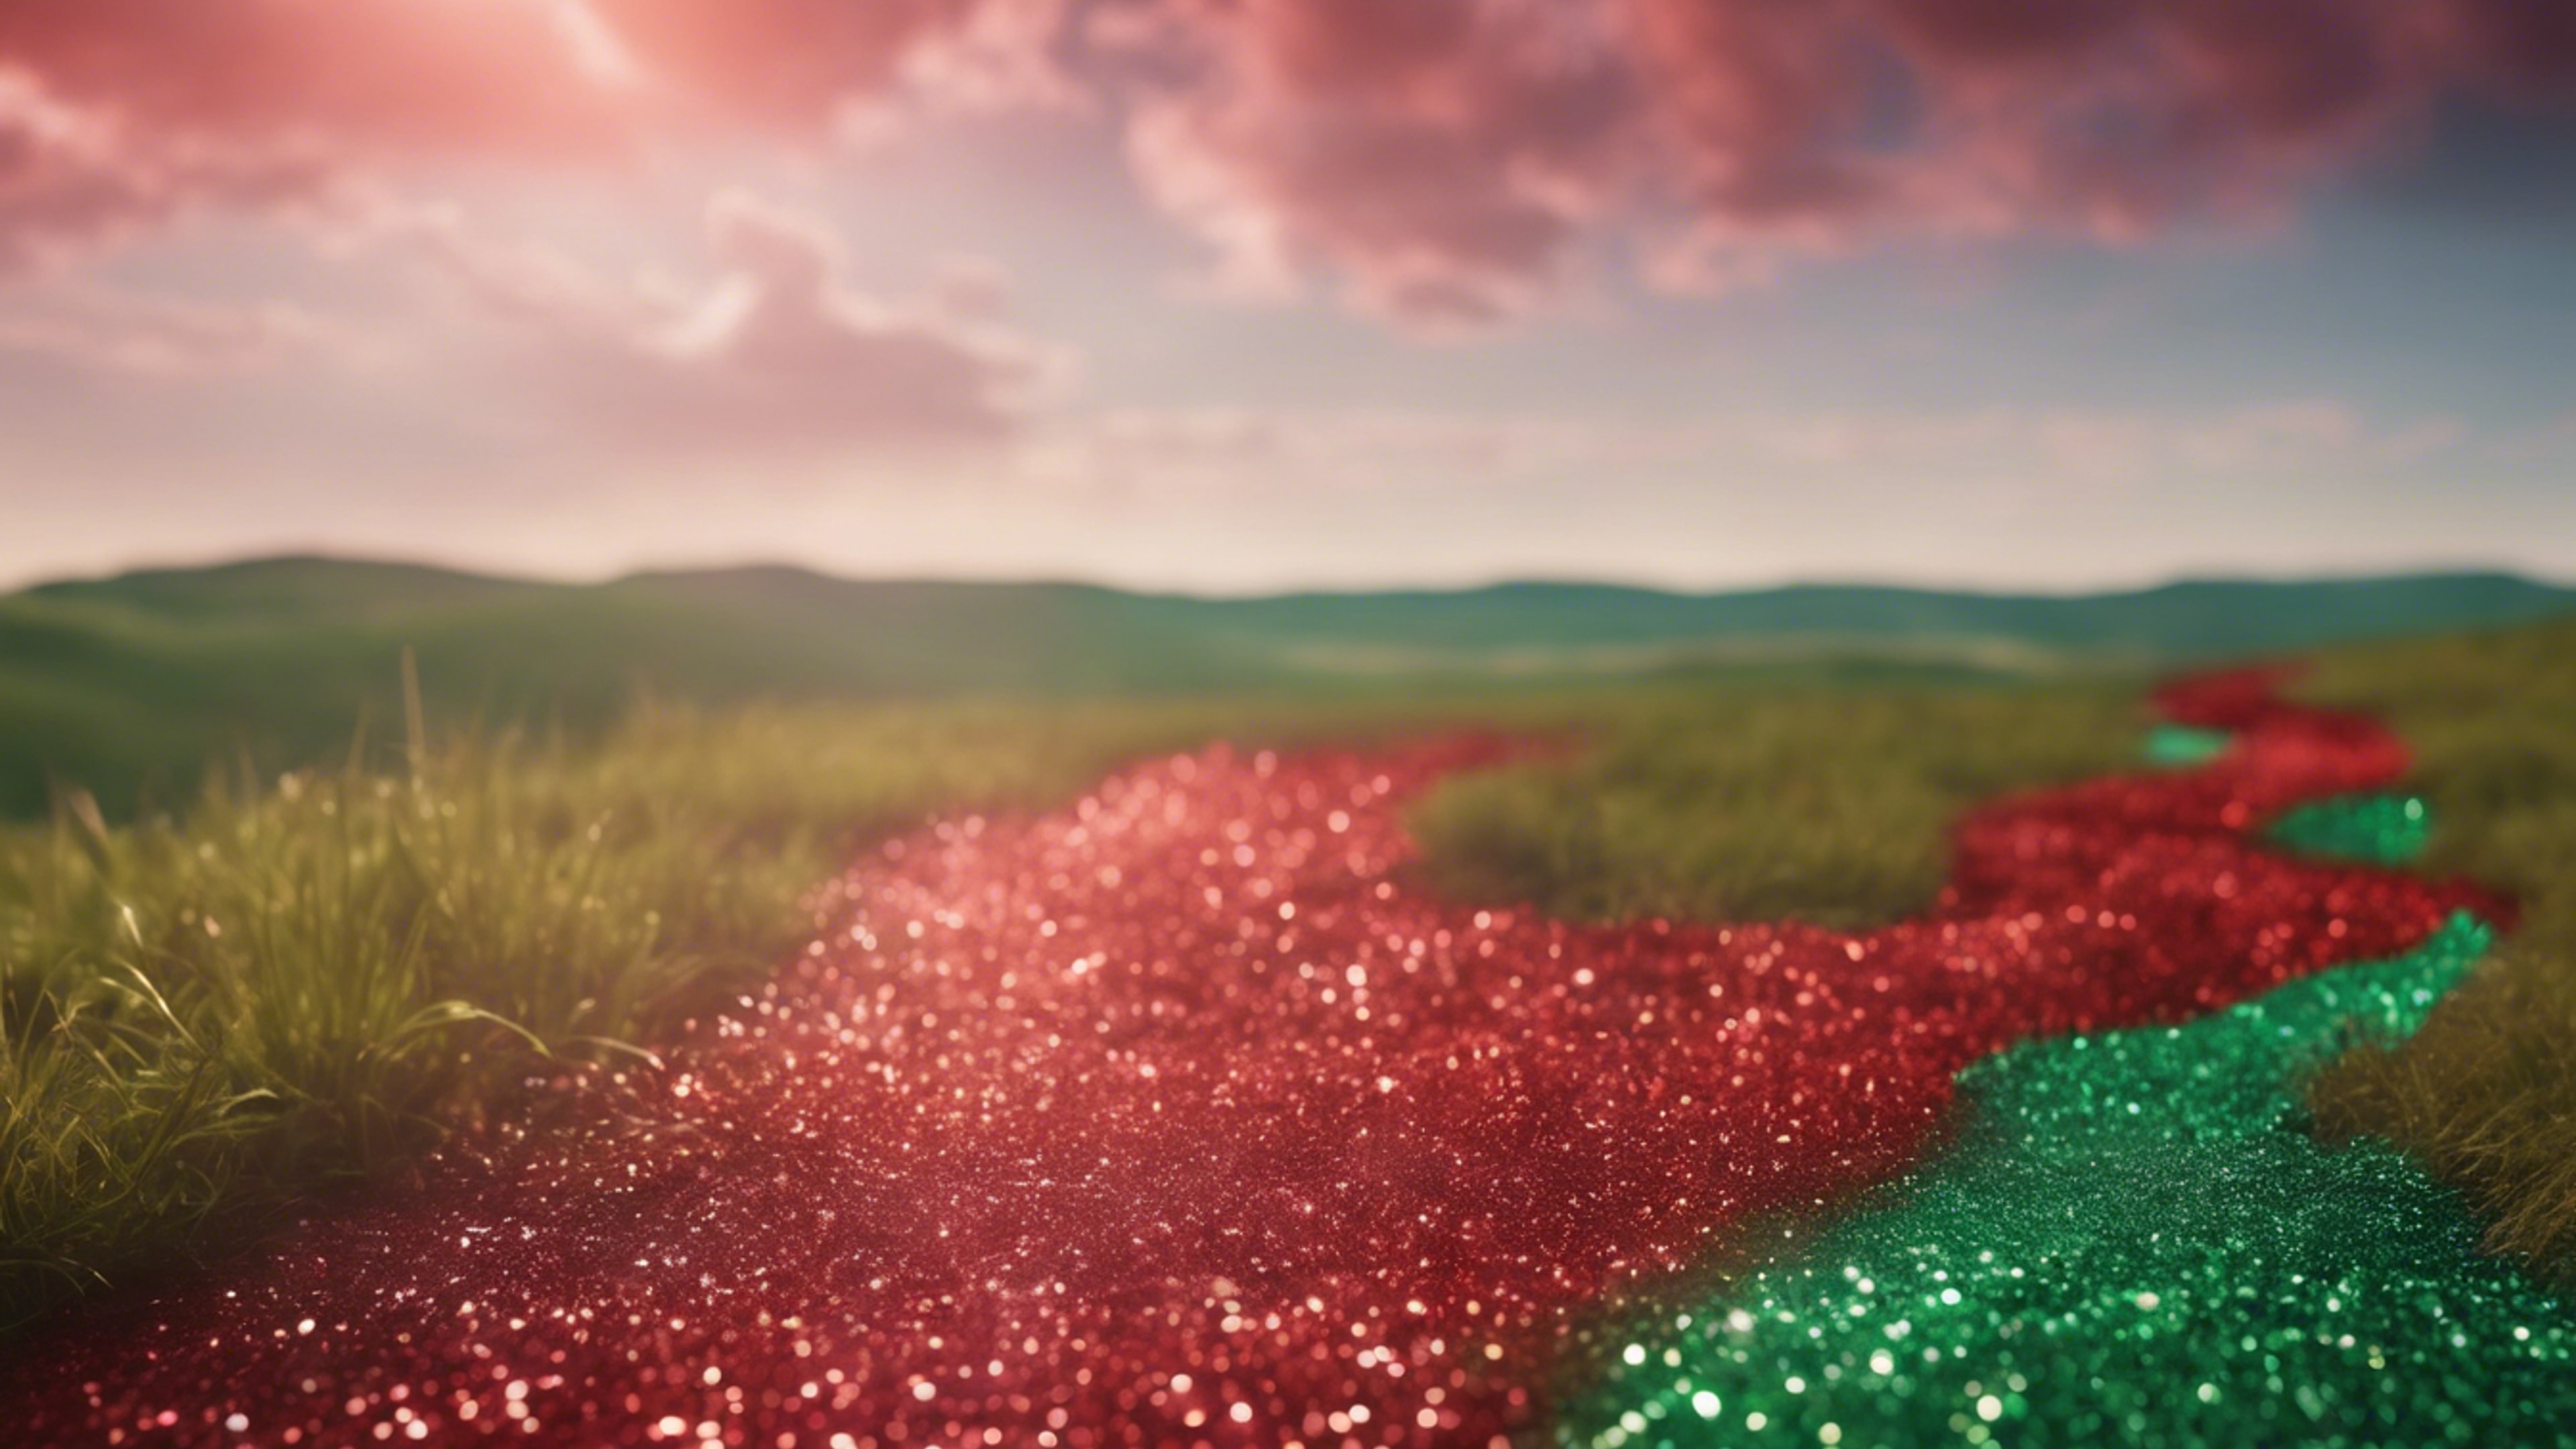 Path of shiny green and red glitter towards the horizon Wallpaper[4b670e6c3f1f43adb6d1]